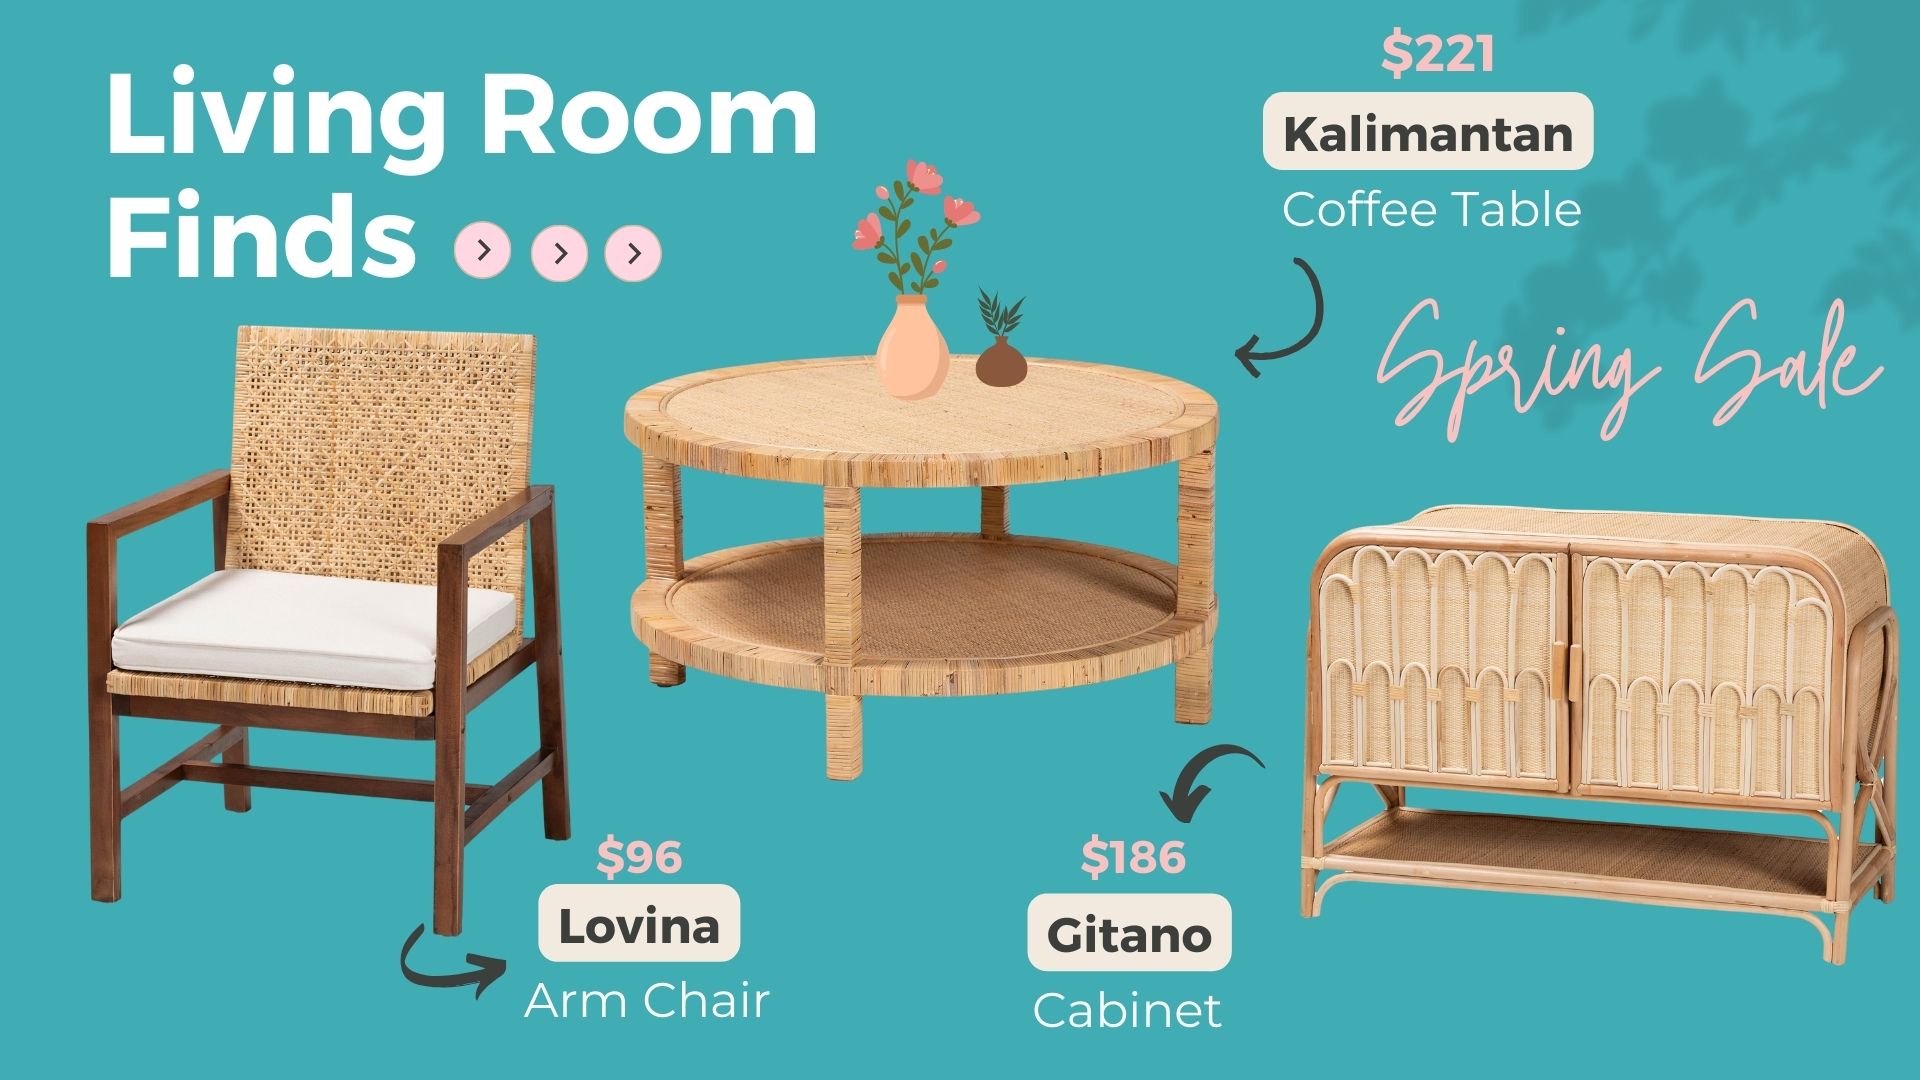 Living Room Finds Lovina Arm Chair $96 Gitano Cabinet $186 Kalimantan Coffee Table $221